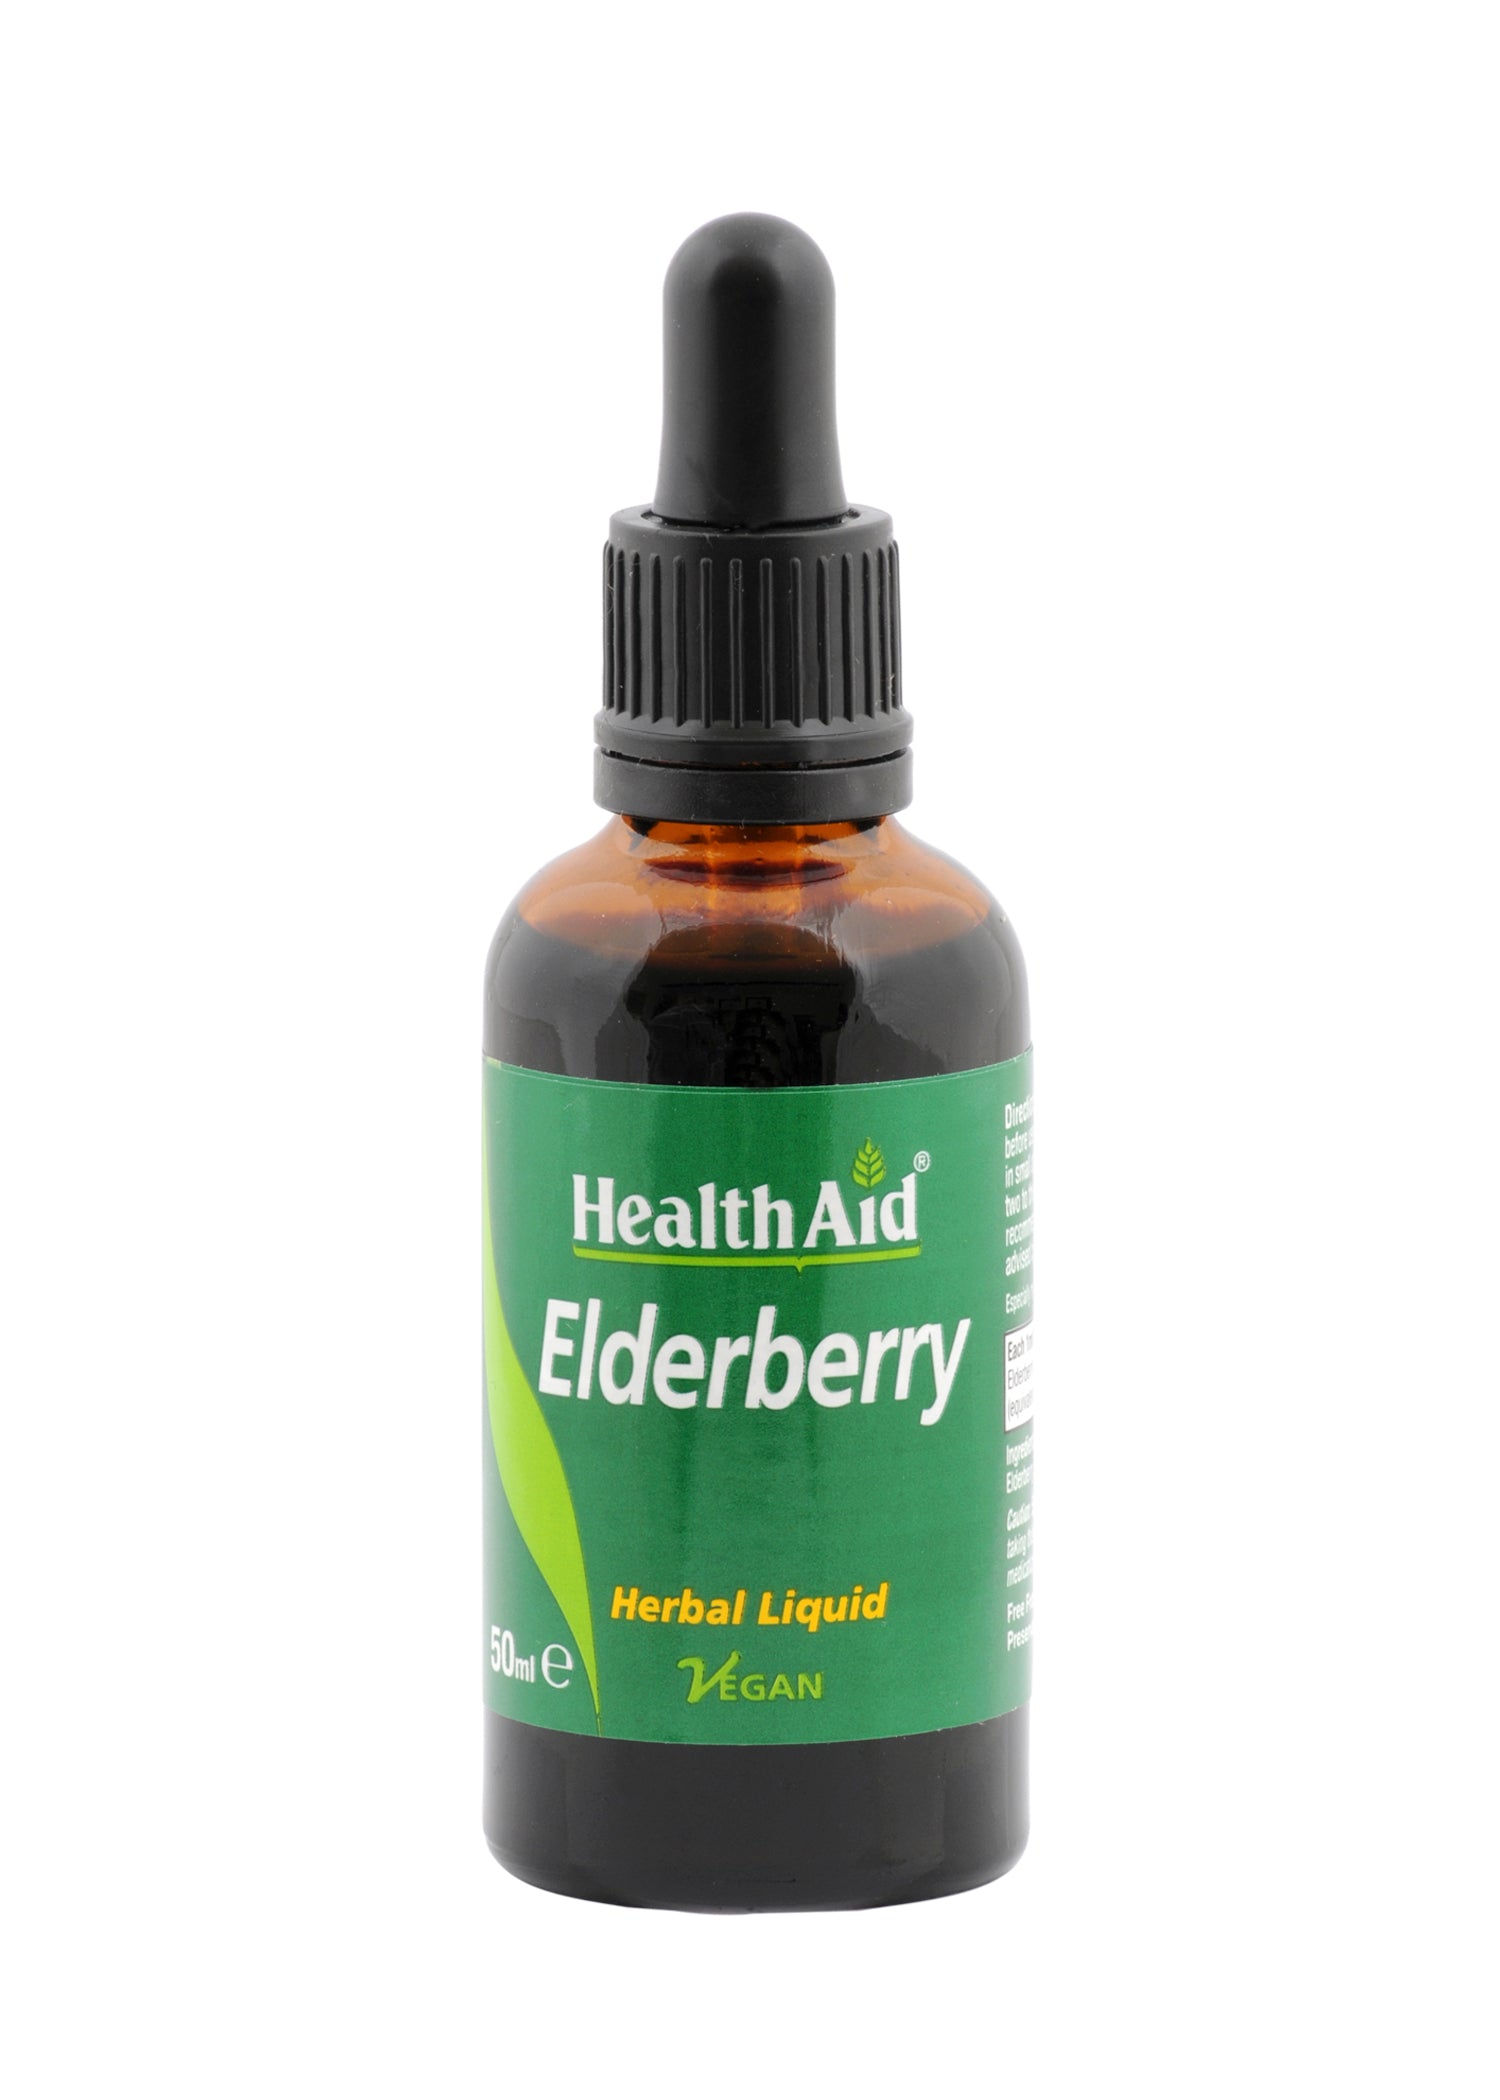 Health Aid Elderberry 50ml